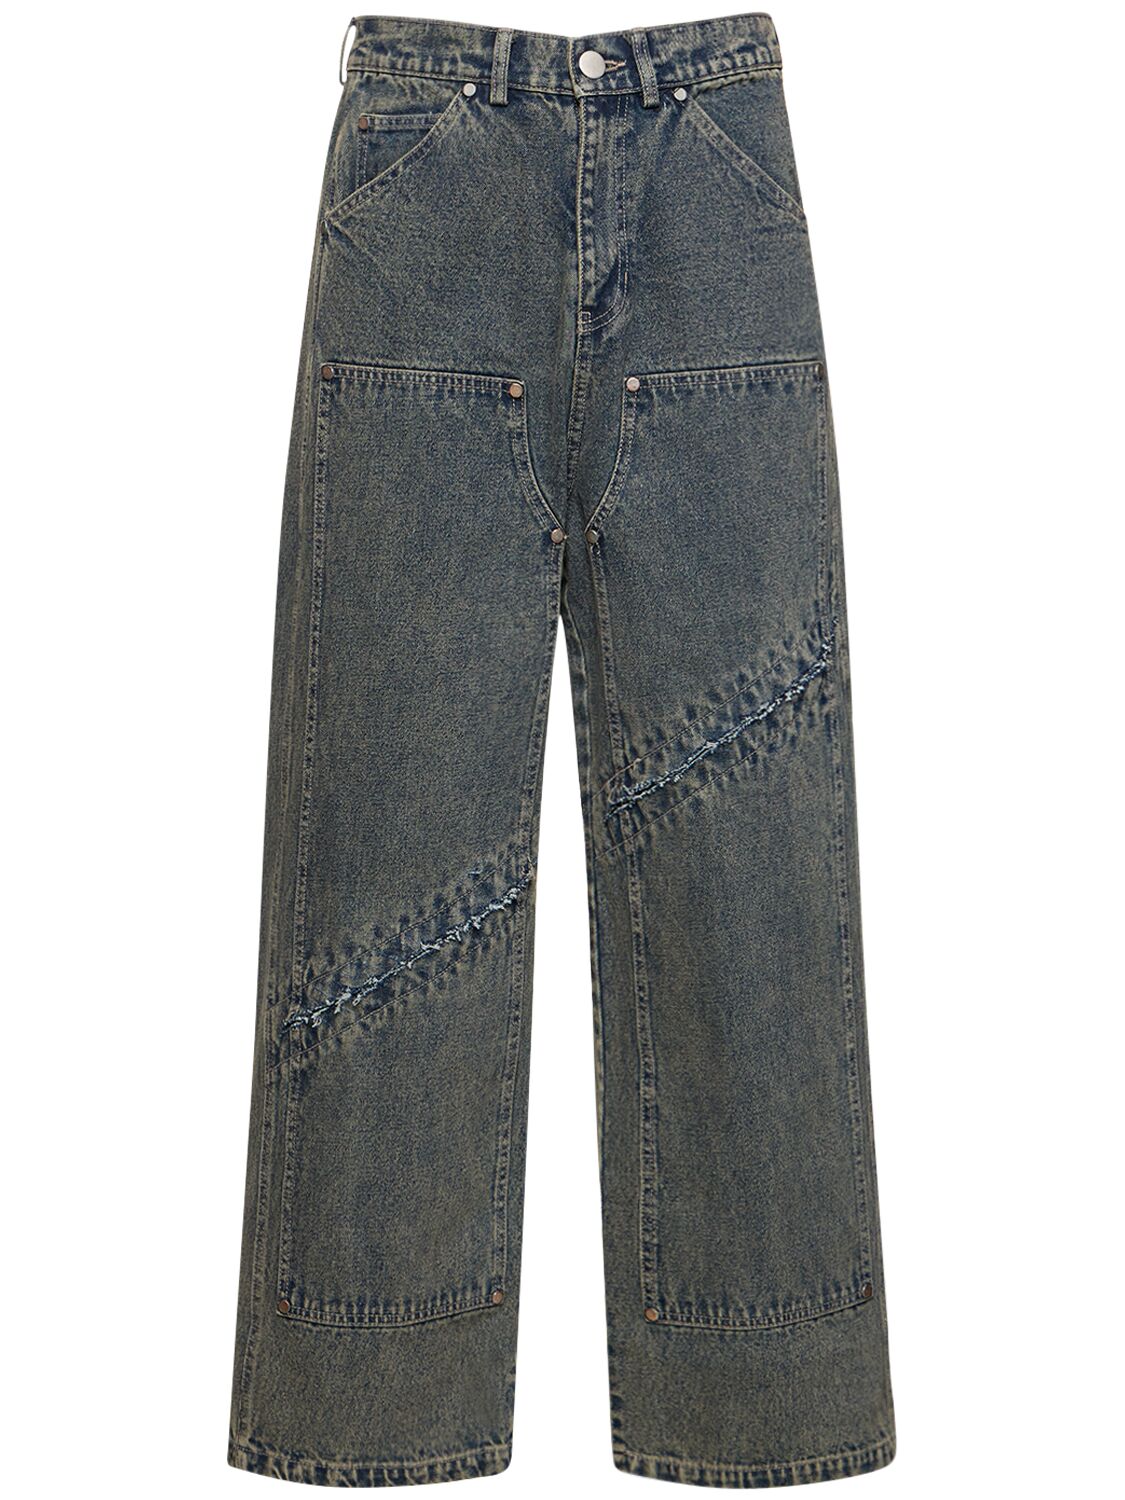 Someit S.o.c Vintage Cotton Denim Jeans In Blue